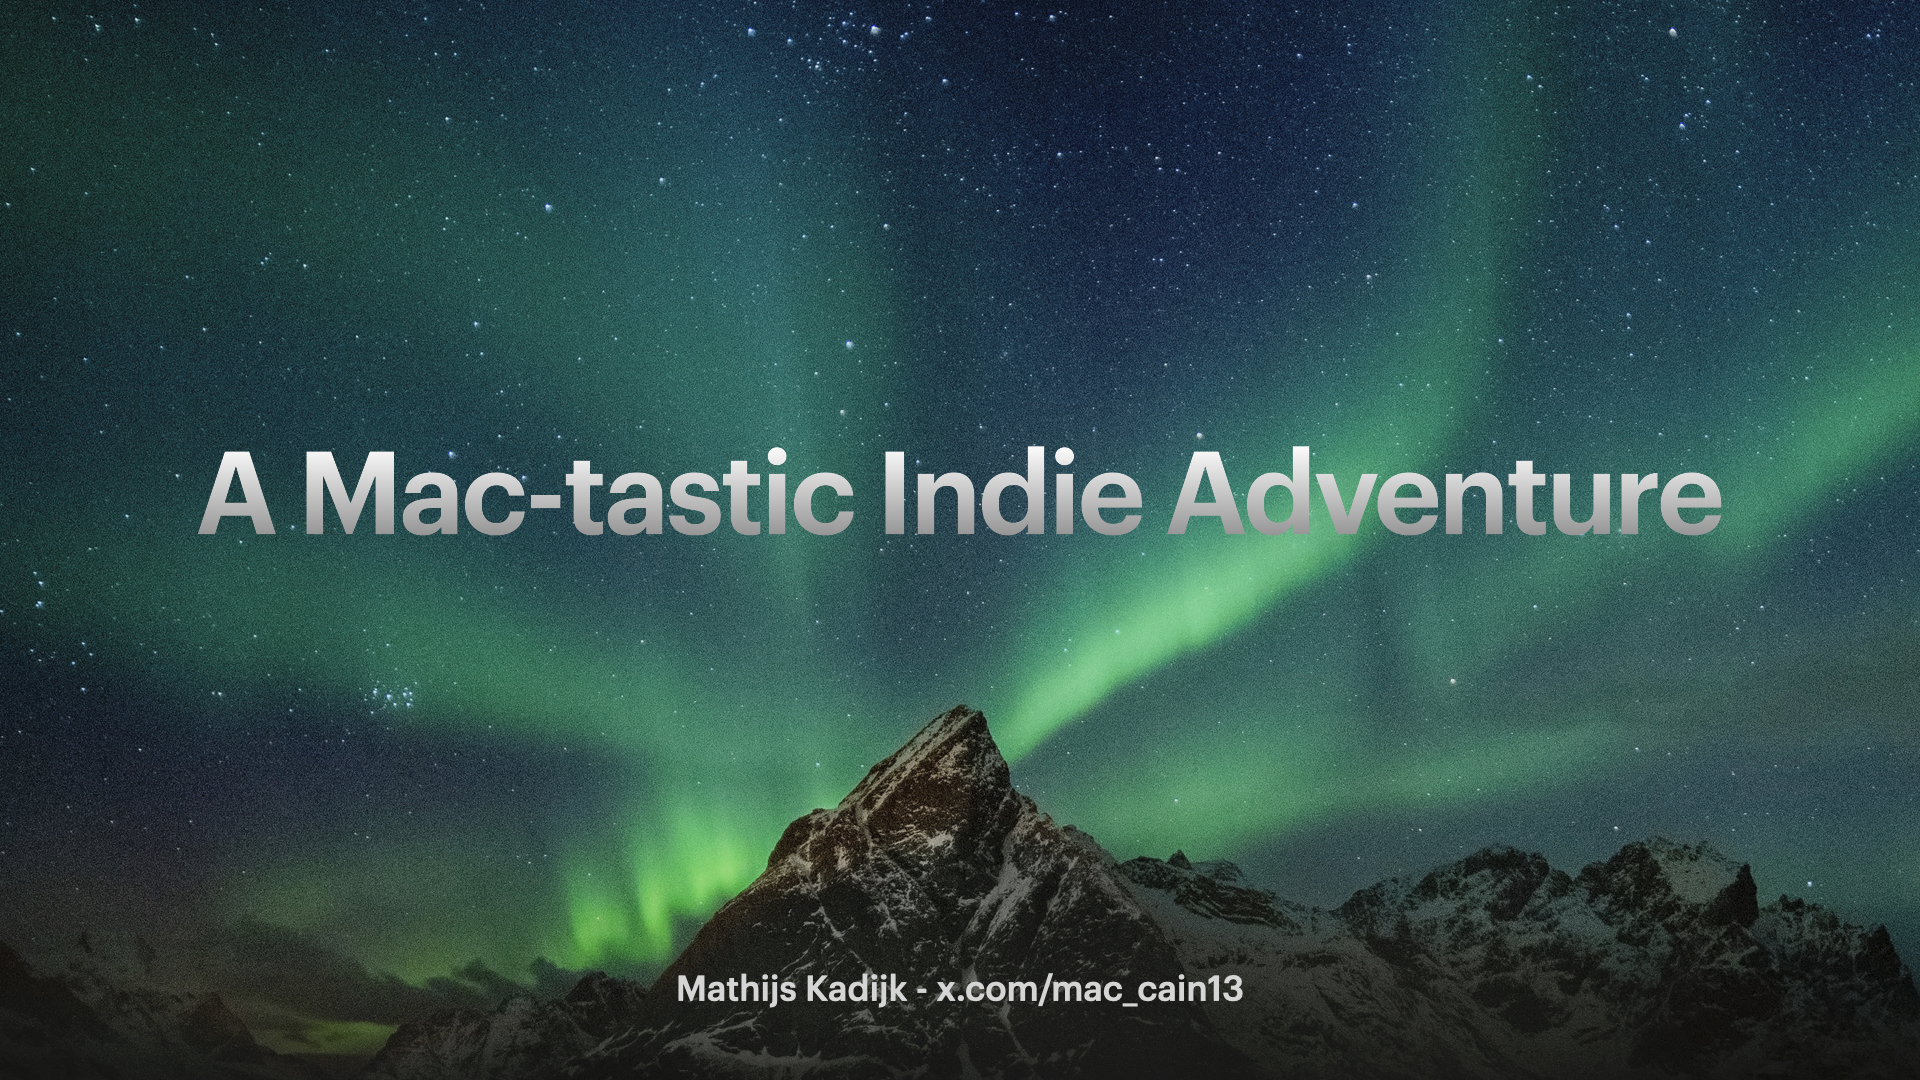 Introduction slide: A Mac-tastic indie adventure